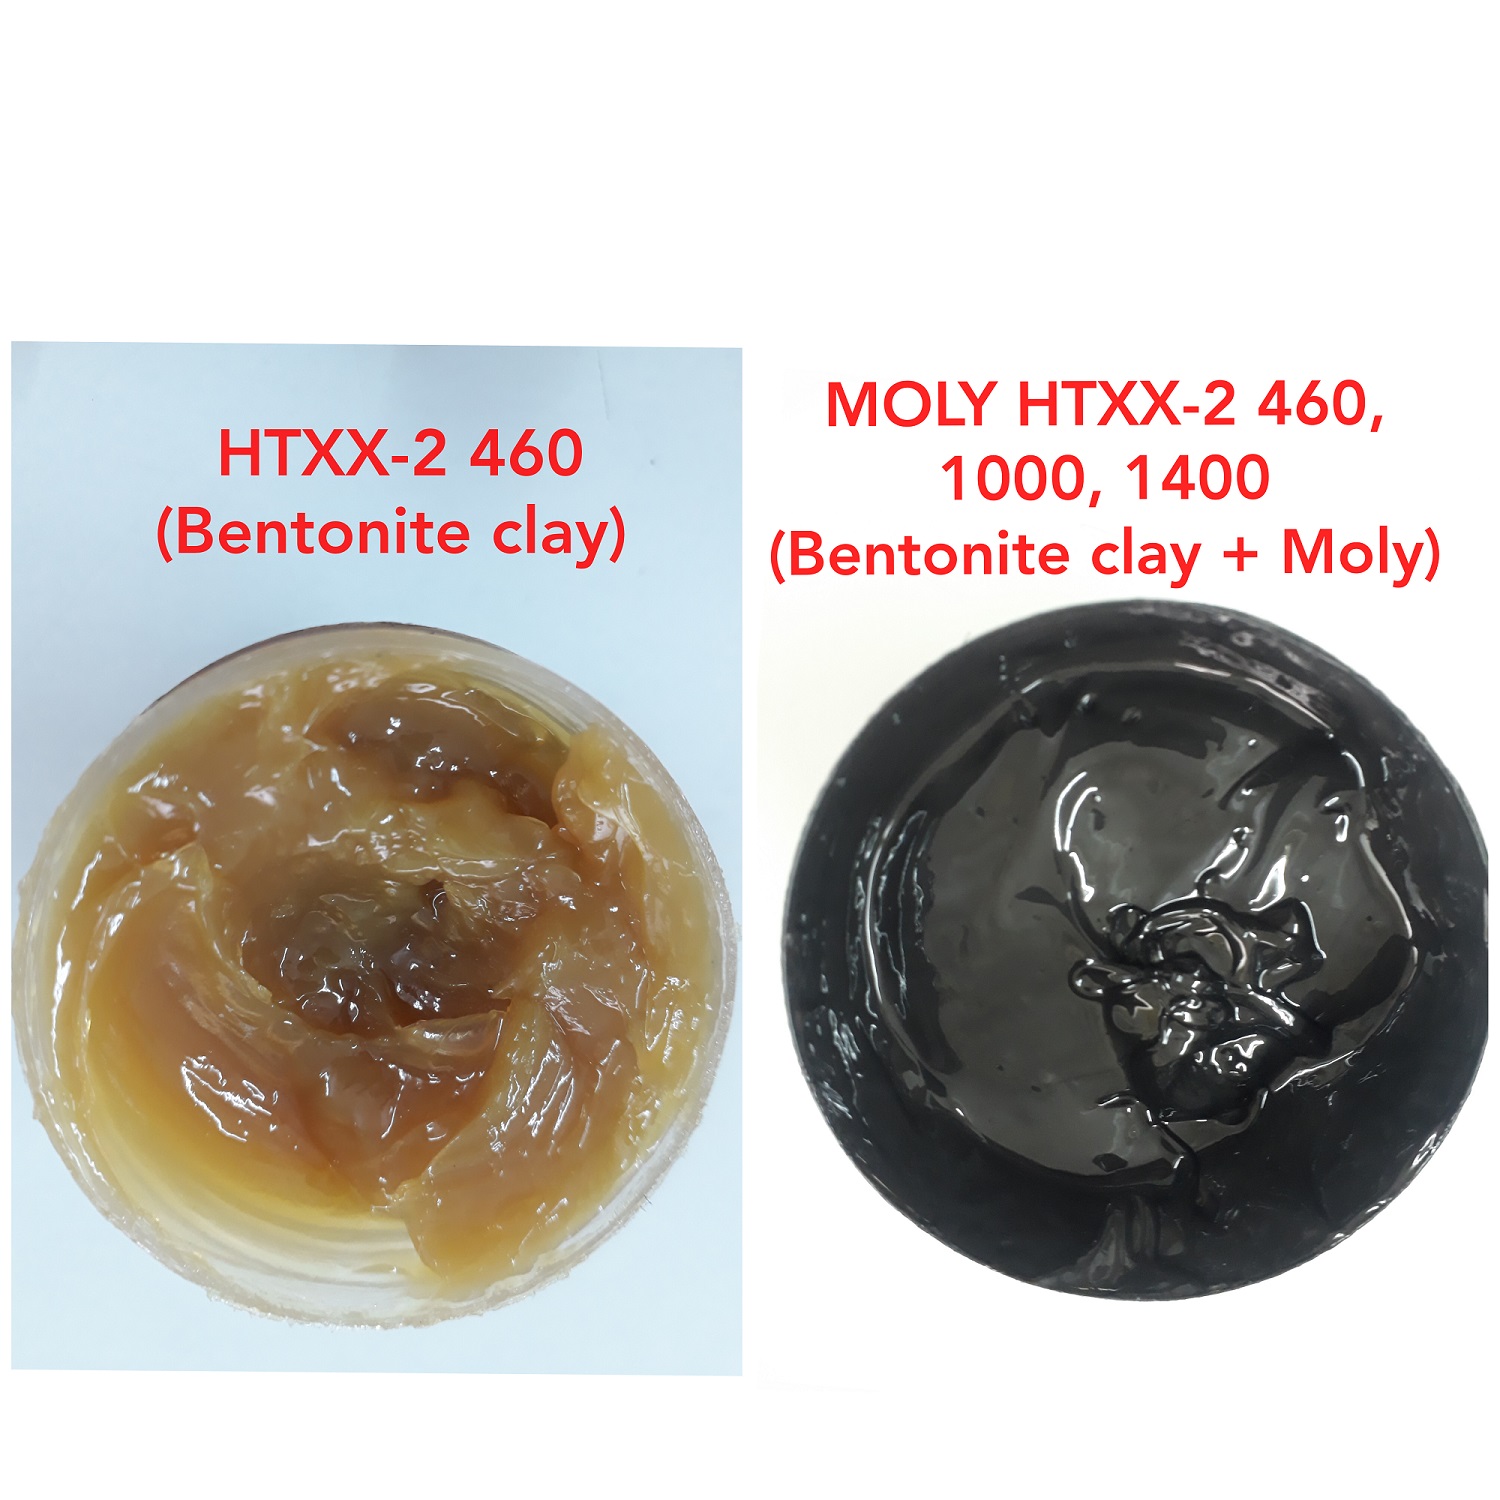 HTXX-2 460 & Moly HTXX-2 460, 1000, 1400 (Bentonite Clay)